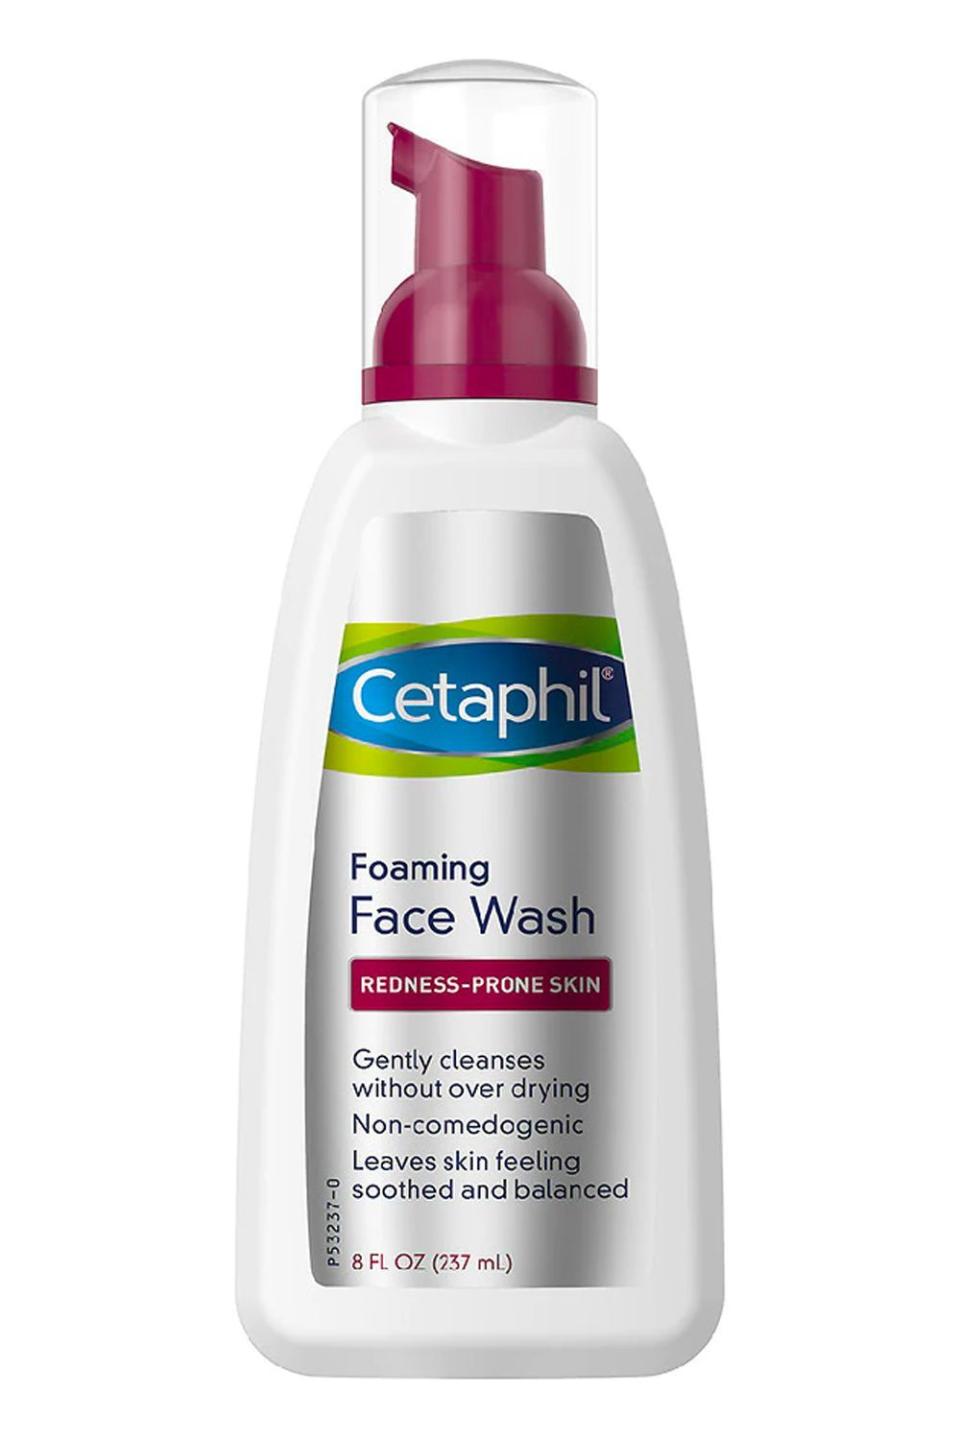 6) Cetaphil Foaming Face Wash Redness-Prone Skin